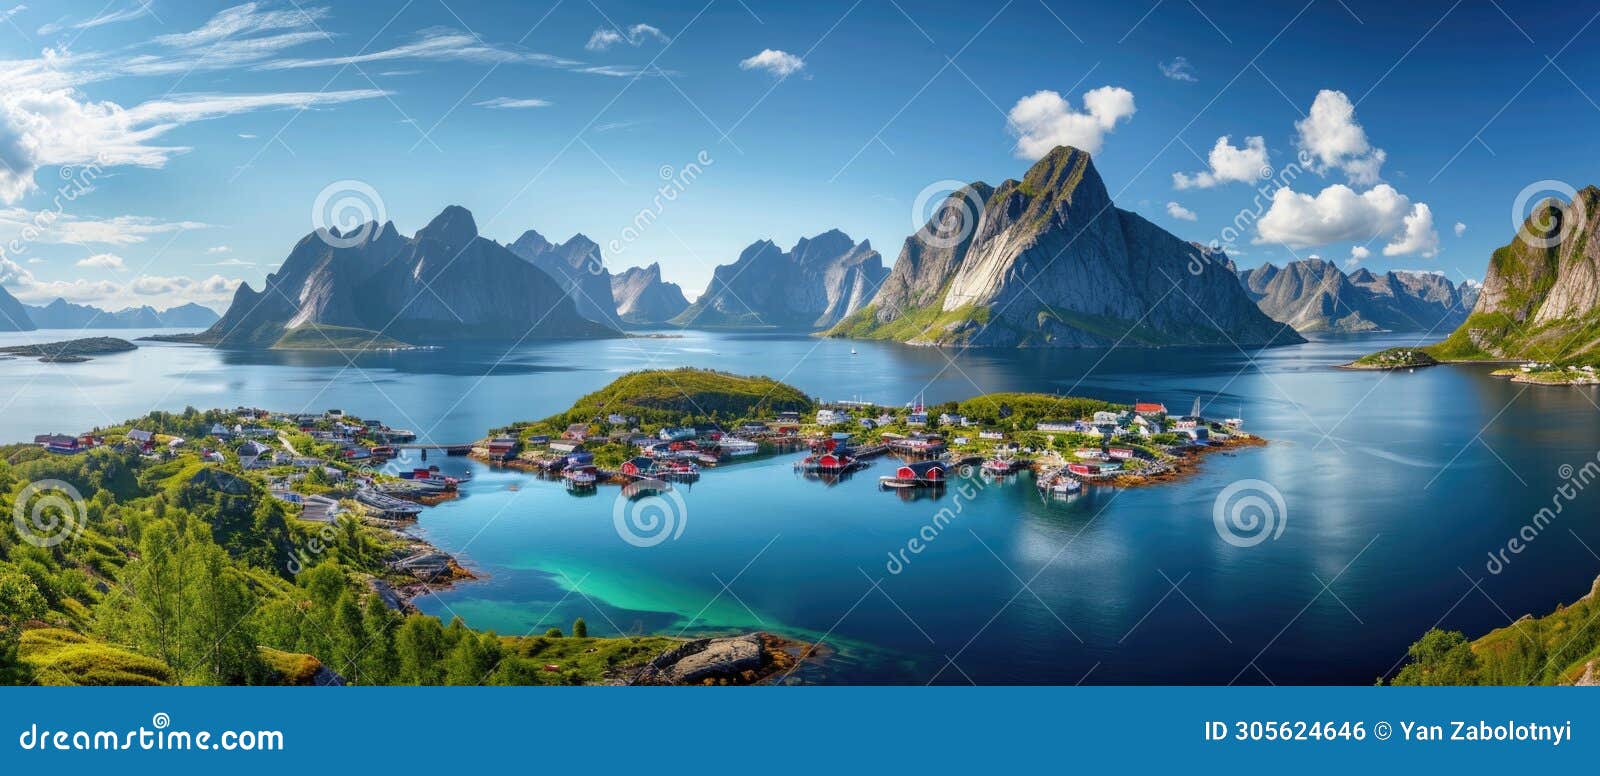 a breathtaking view of the picturesque reine in norways lofoten islands